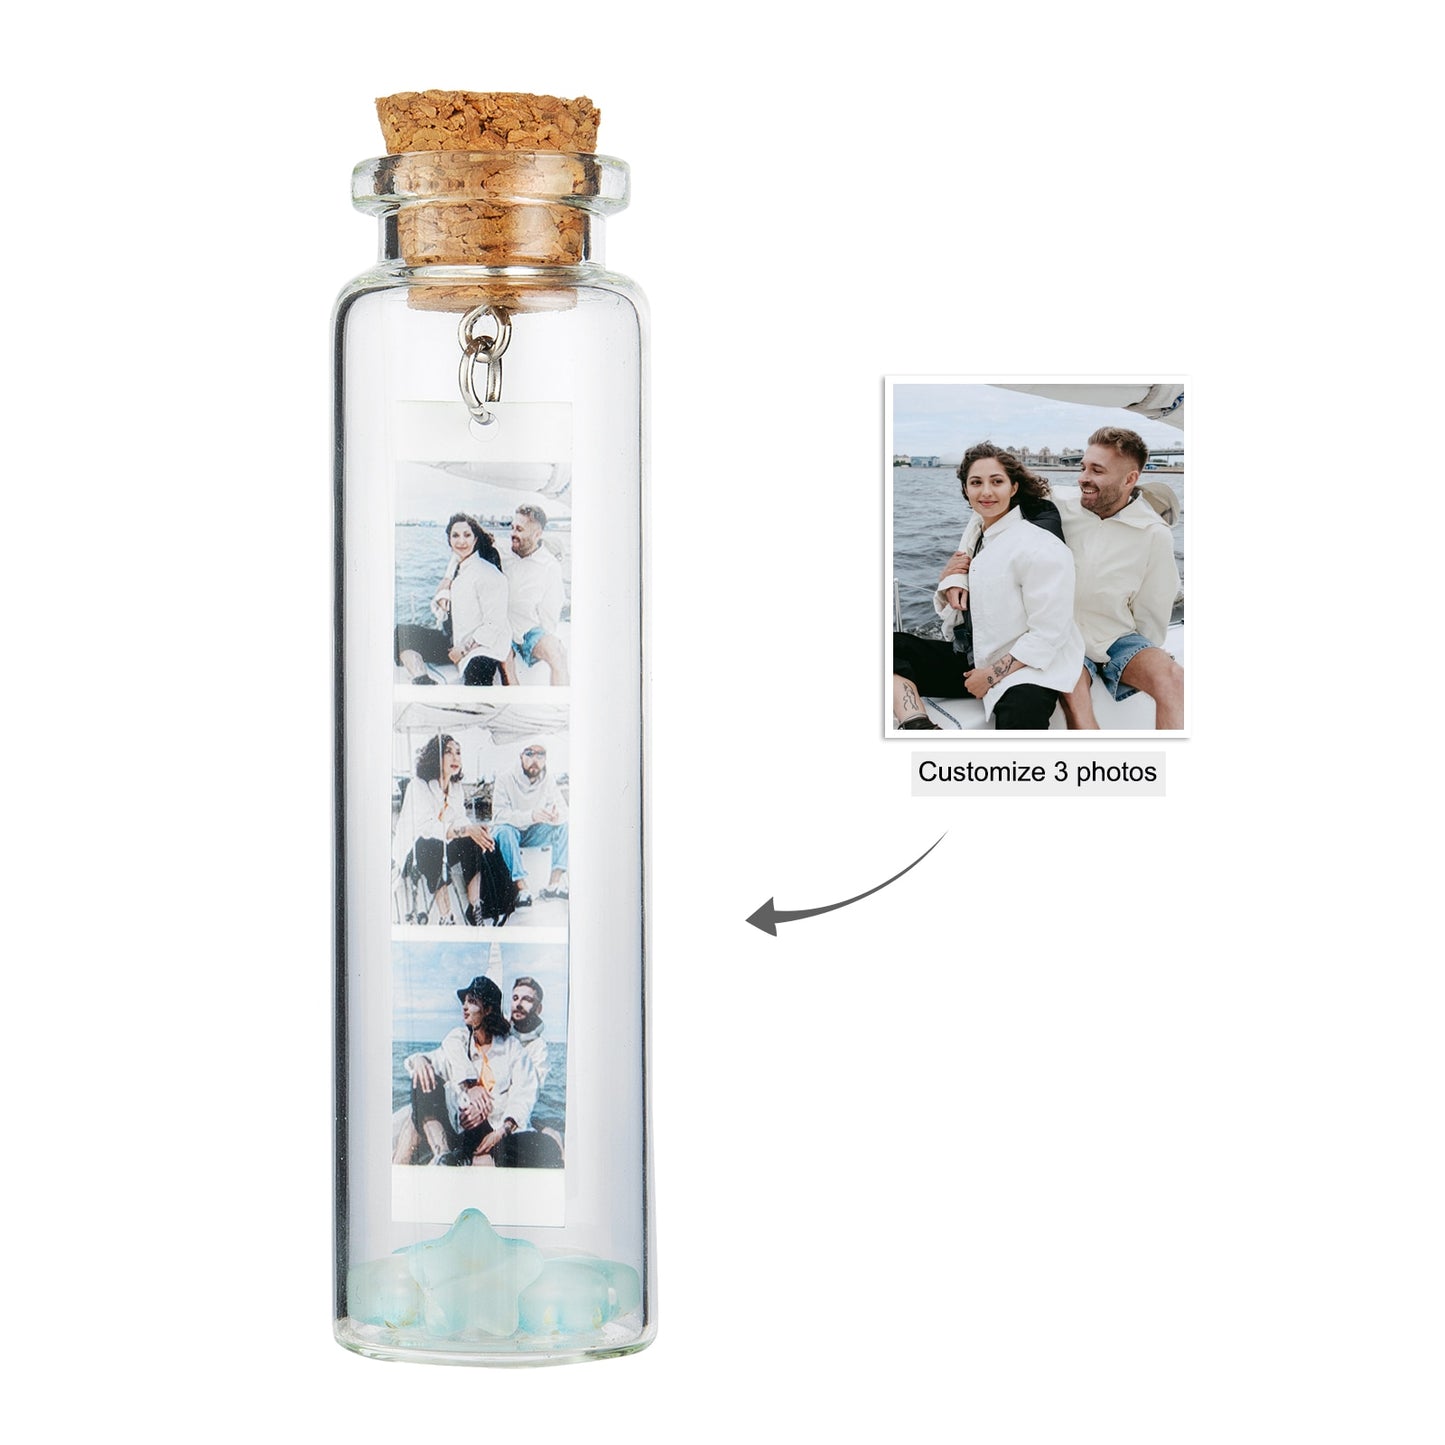 Custom Image Glass Bottle Stopper Vials Jars With Cork